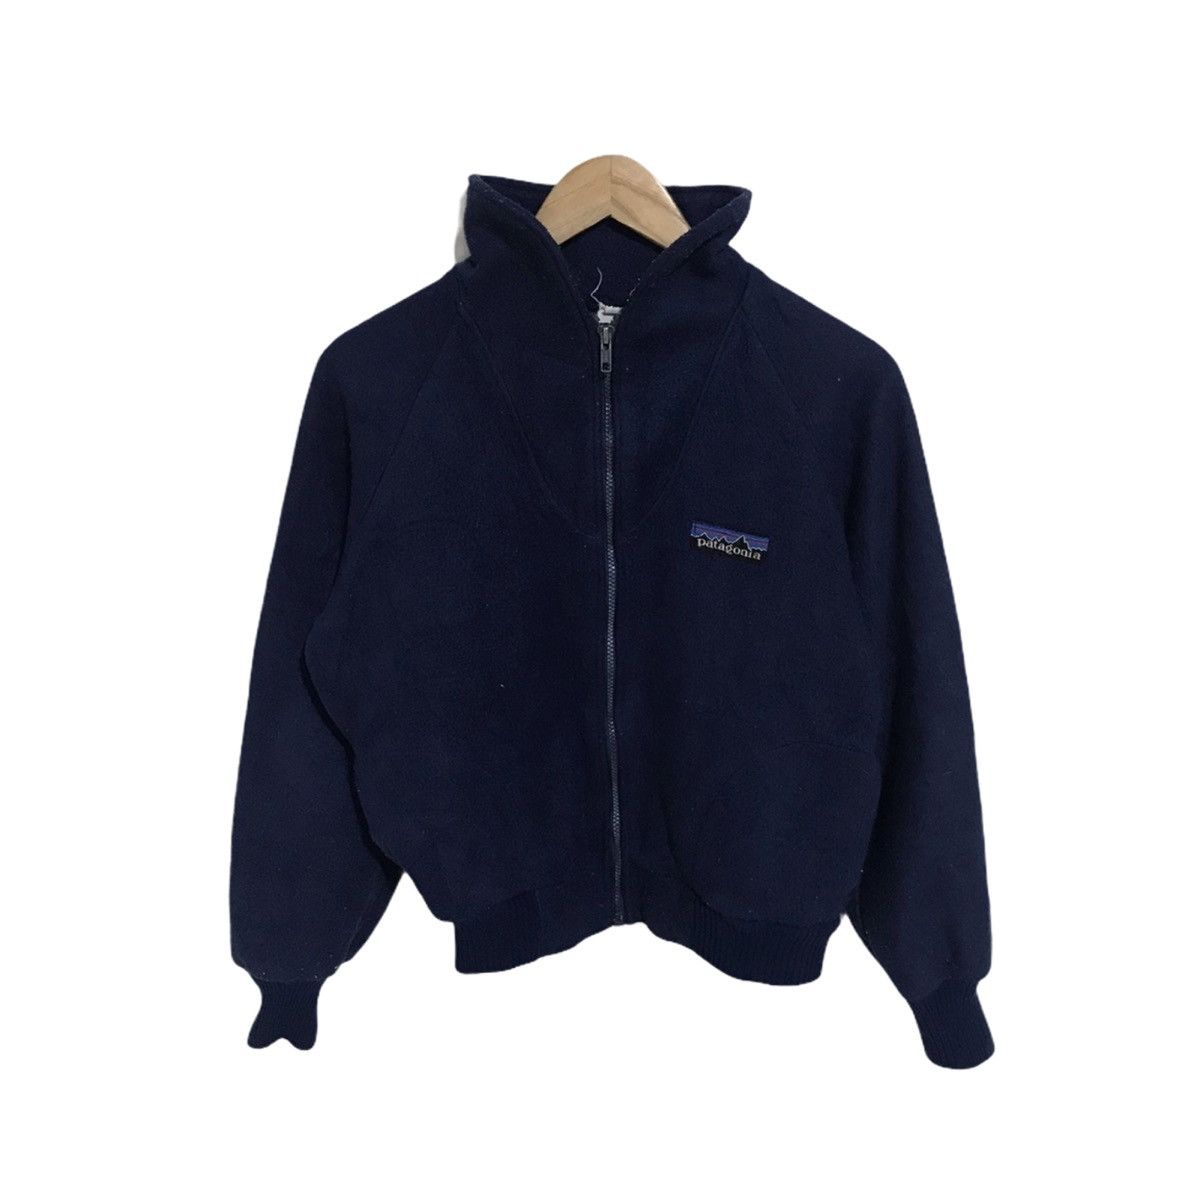 Vintage patagonia fleece zip jacket - 1